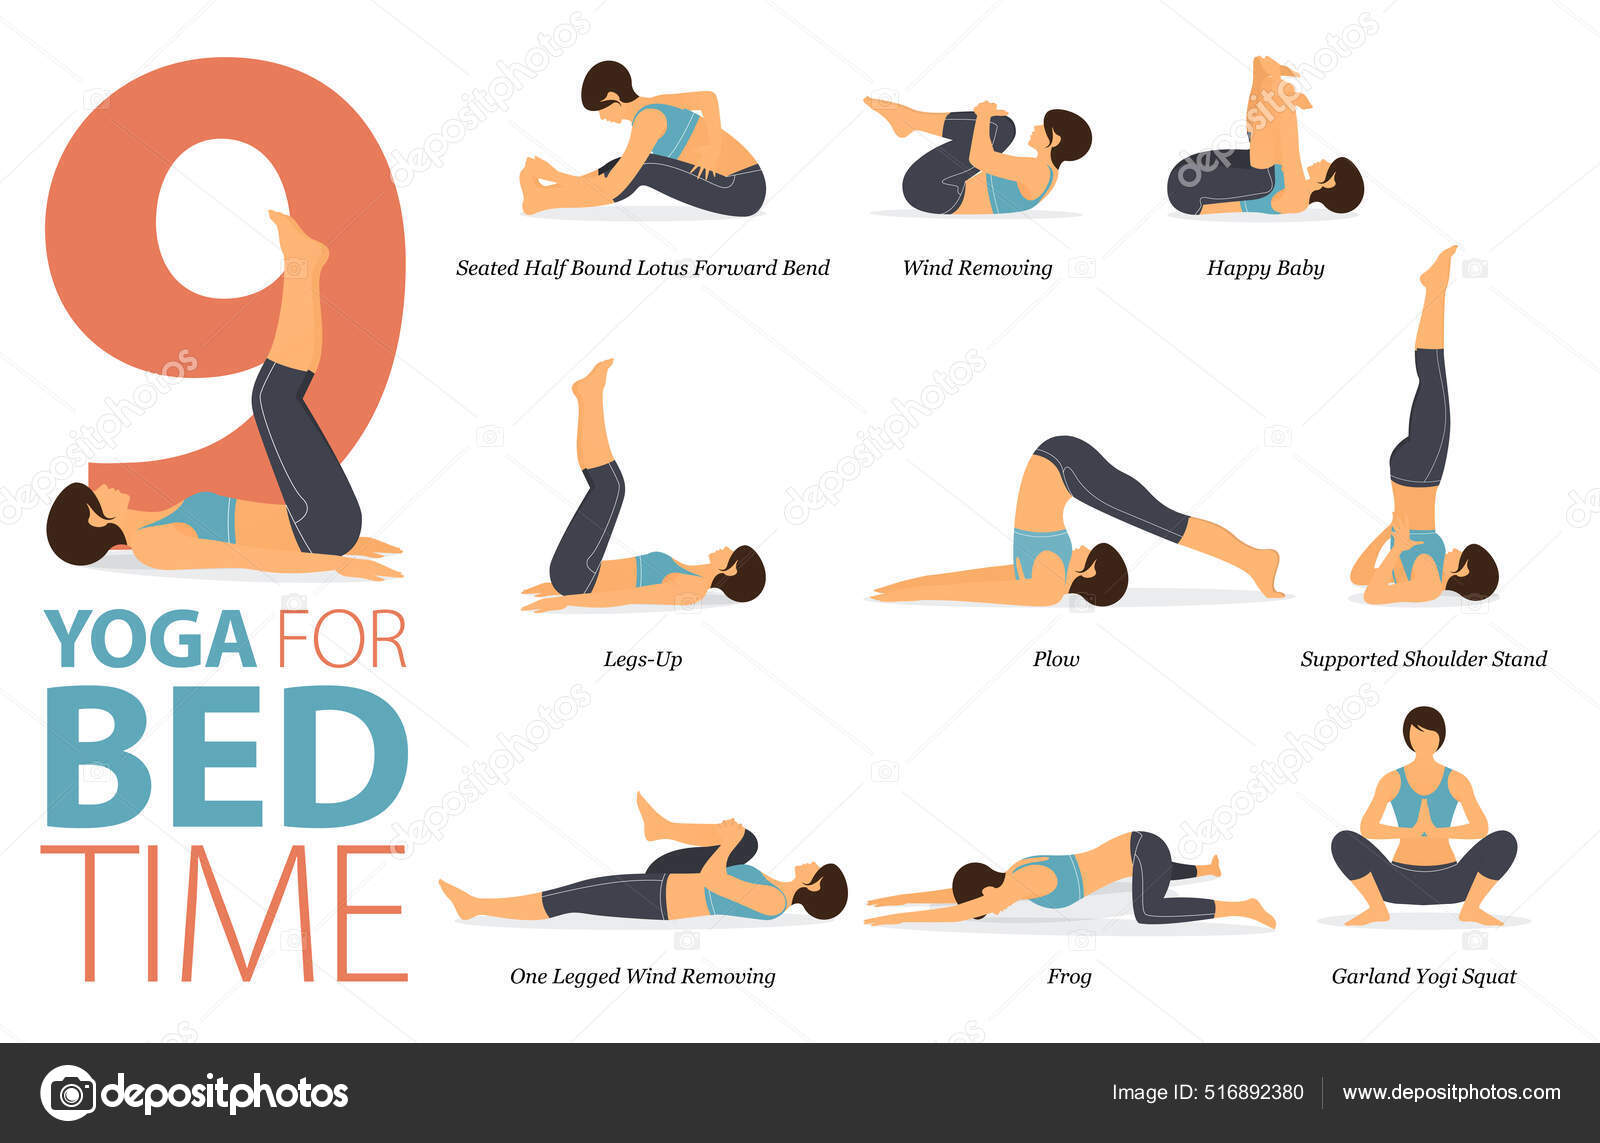 https://st.depositphotos.com/11342704/51689/v/1600/depositphotos_516892380-stock-illustration-infographic-yoga-poses-workout-home.jpg